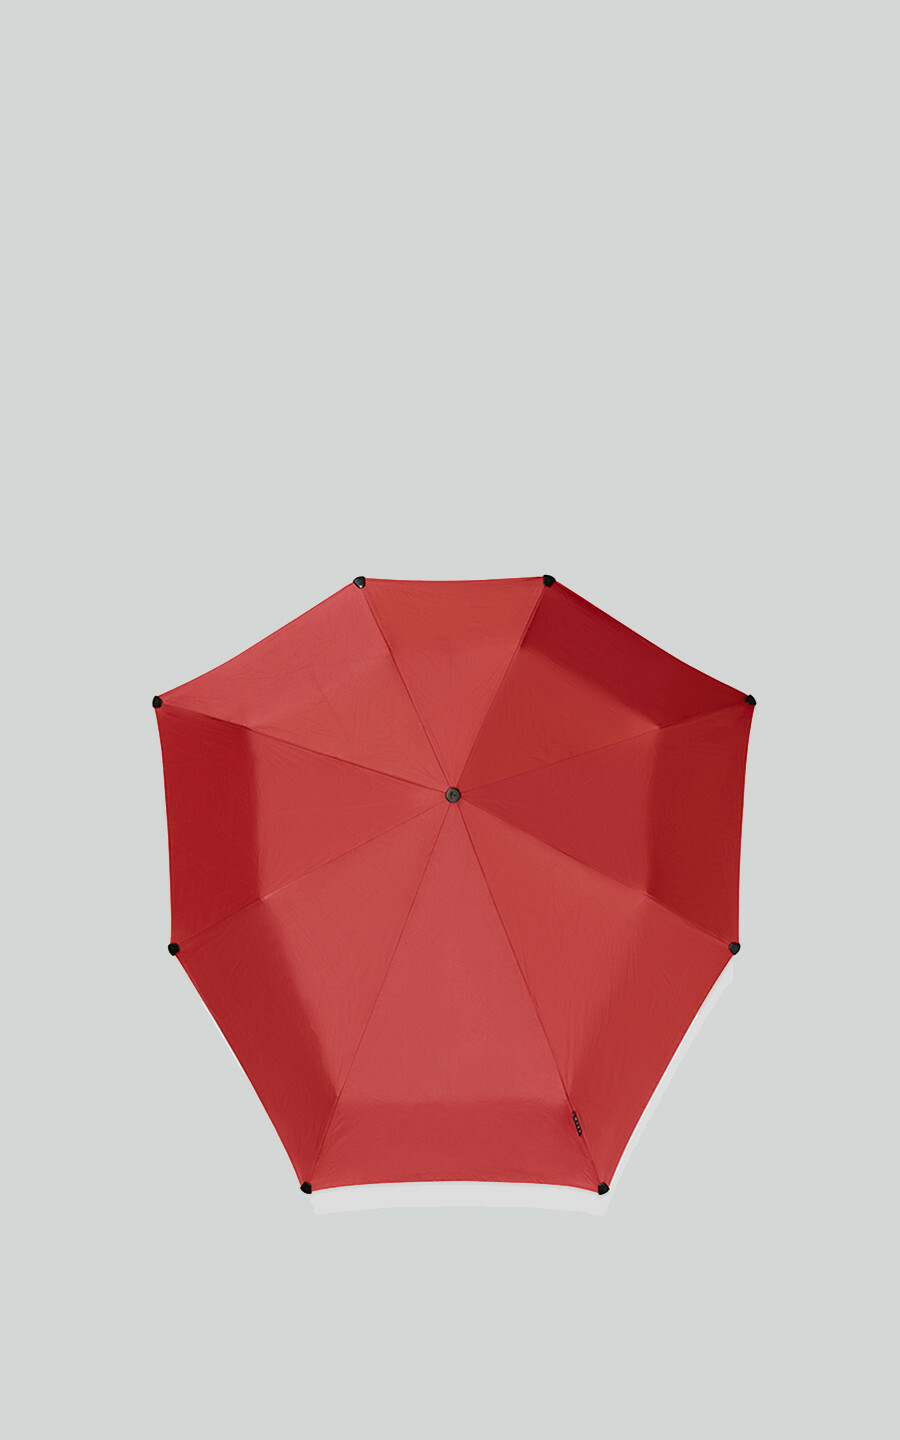 Rood Paraplu s image